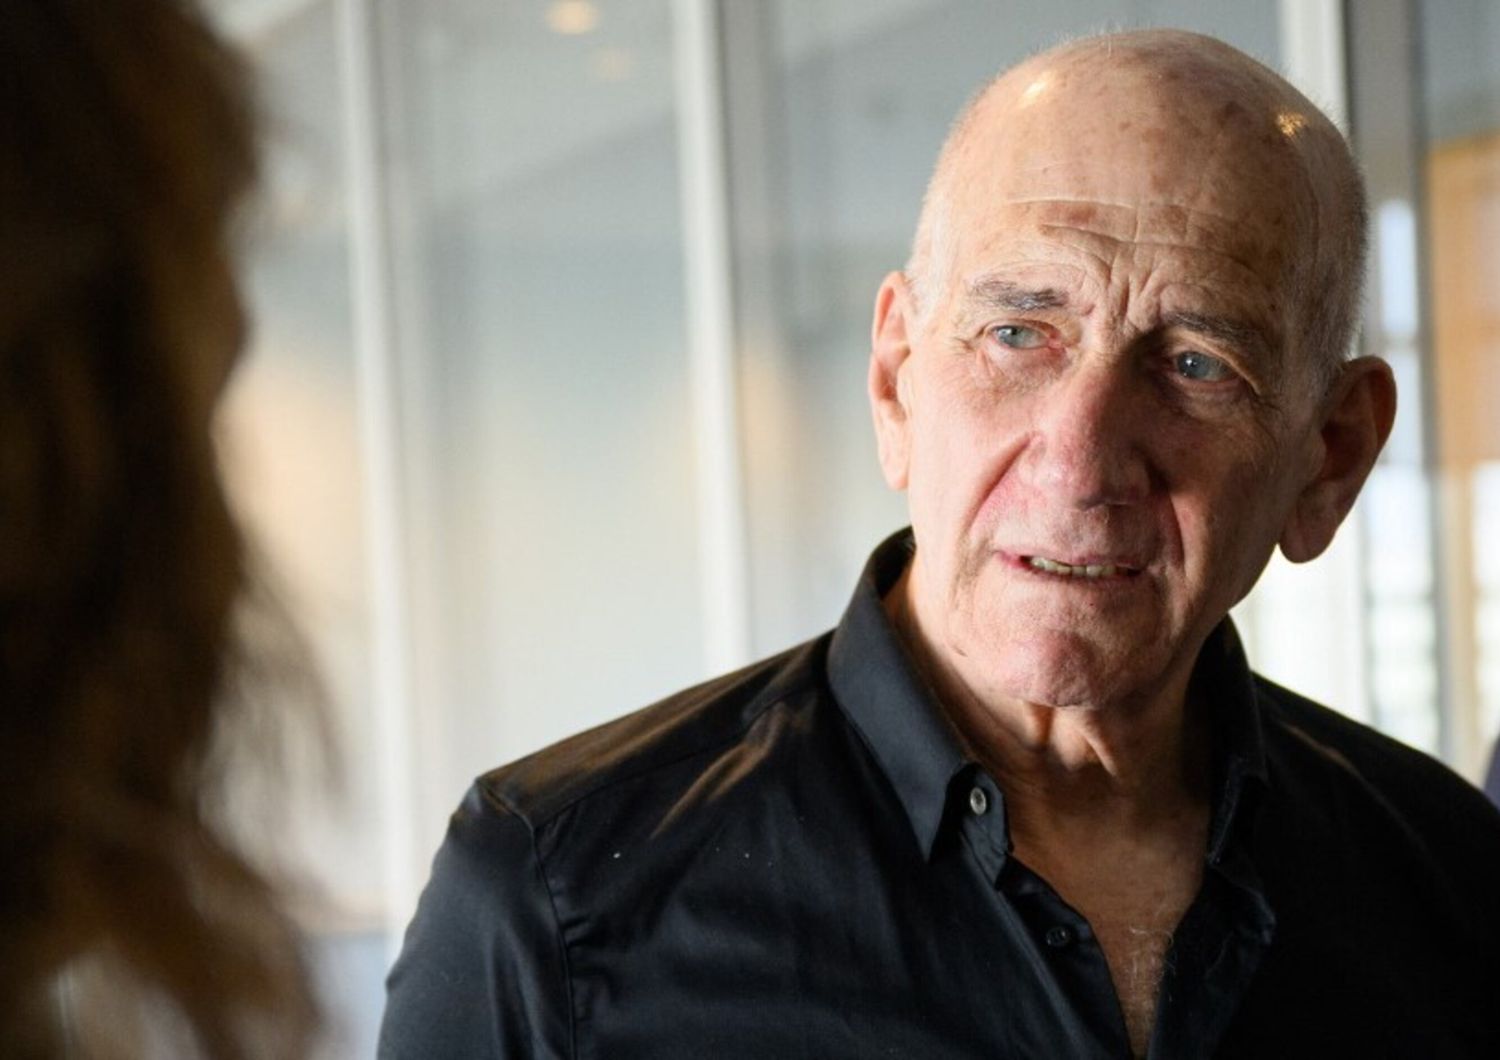 L'ex premier israeliano Ehud Olmert